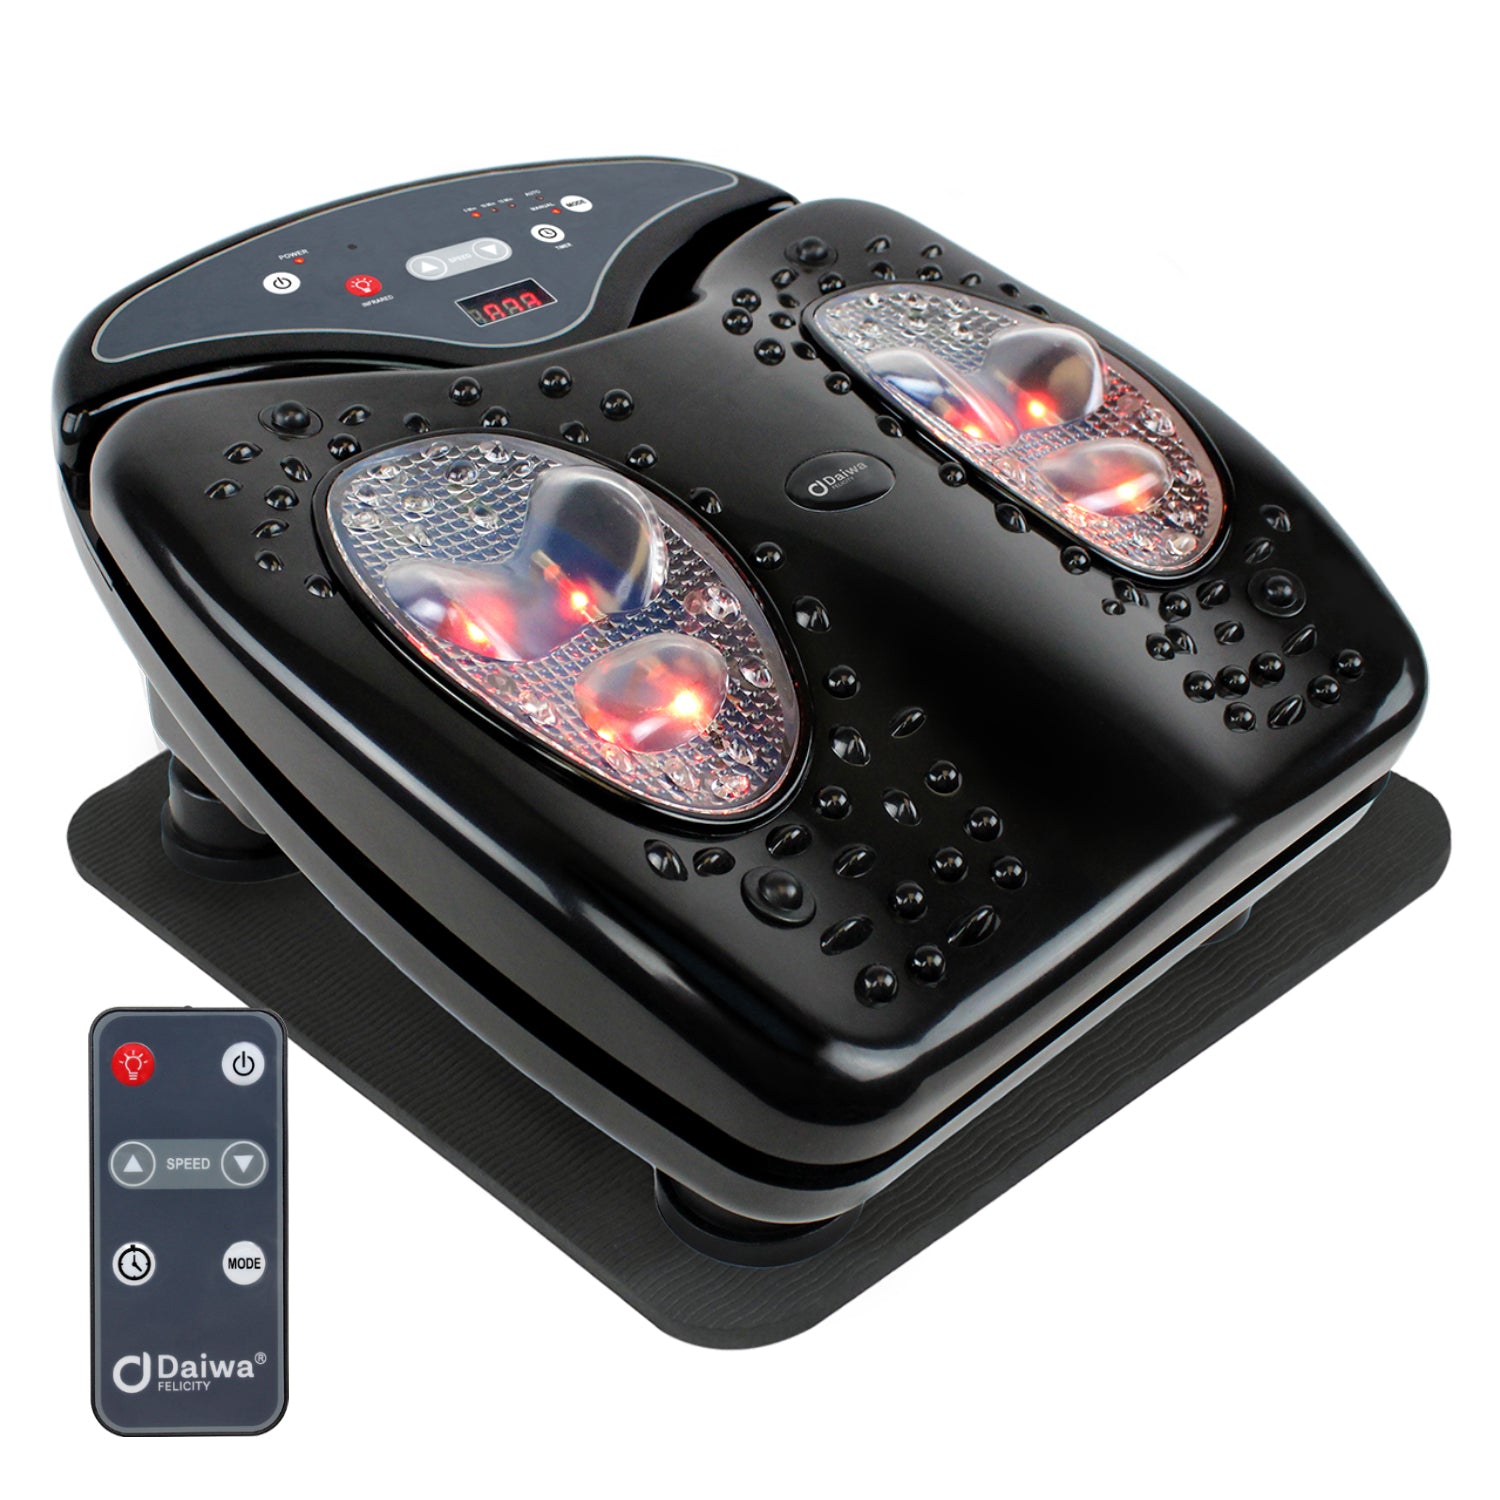 Footvibe Pro Infrared Vibrating Foot Massager USJ-871 FSA/HSA Eligible